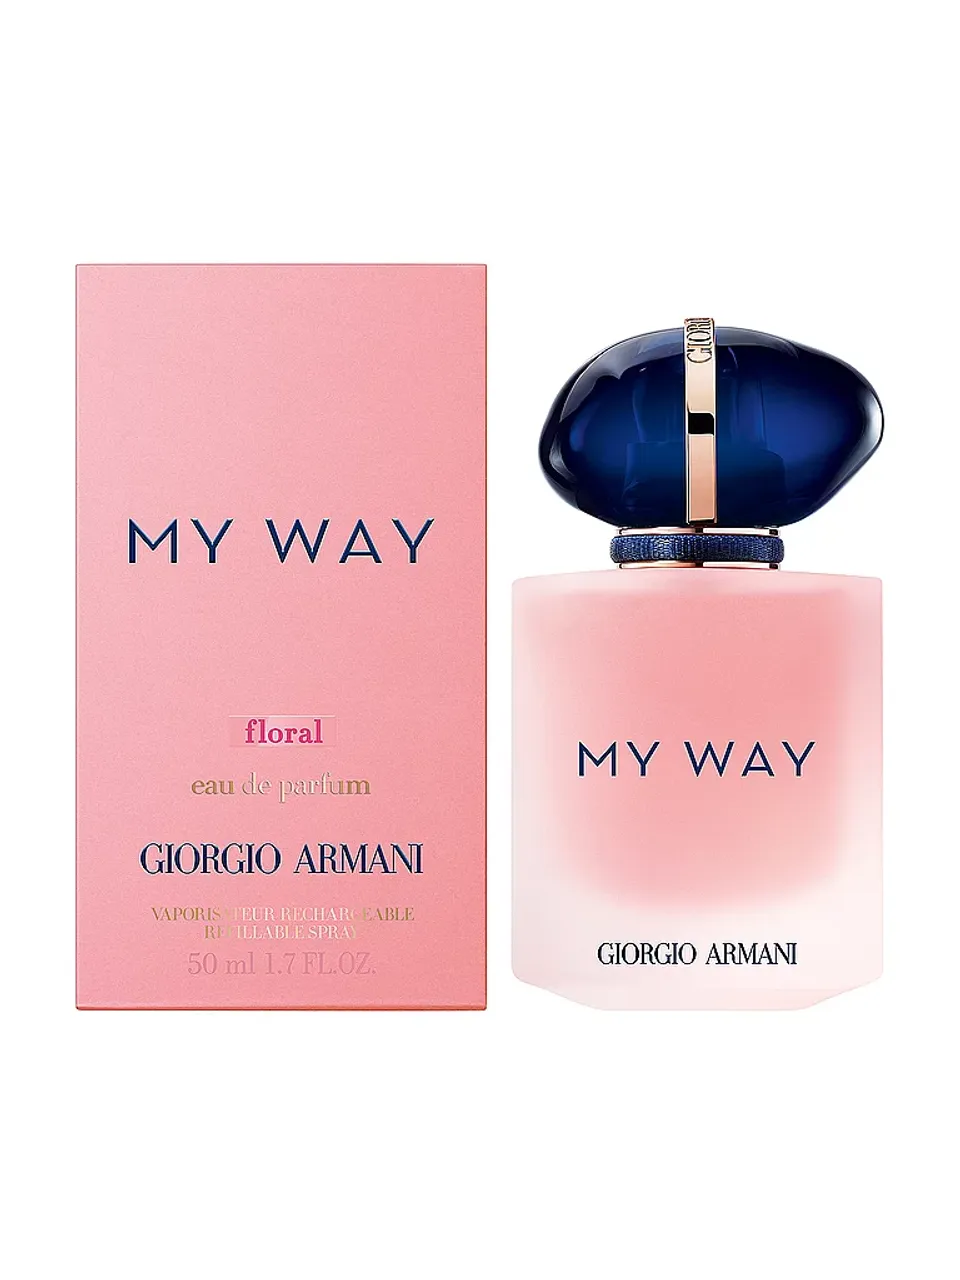 GIORGIO ARMANI My Way Floral Eau de Parfum 50ml